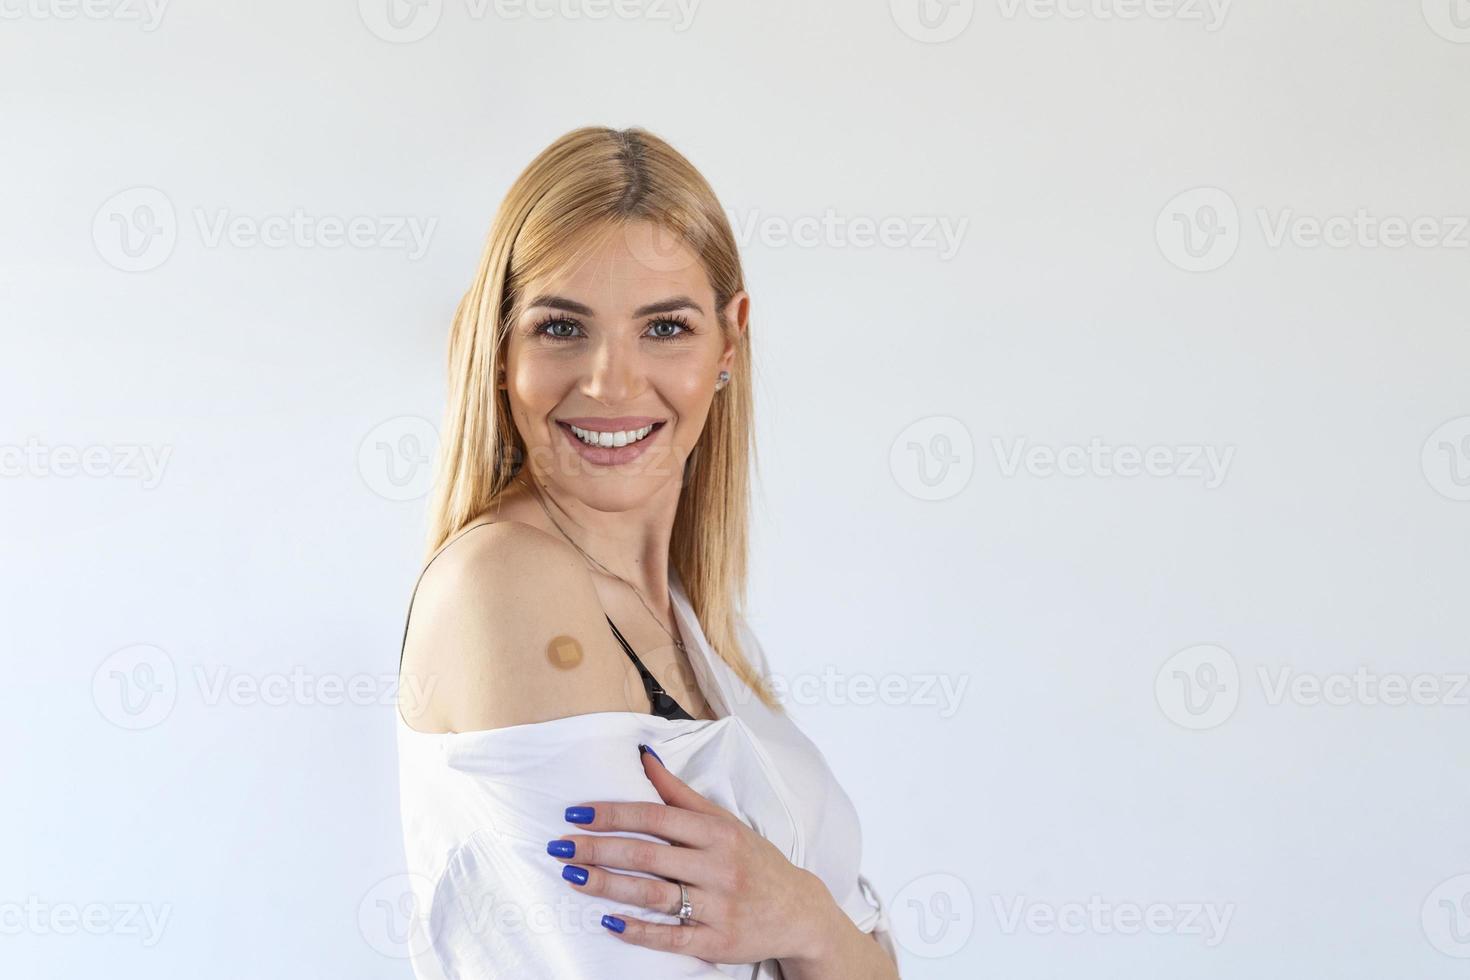 jovem loira vacinada contra covid-19 com um sorriso no rosto mostra a marca da vacina foto